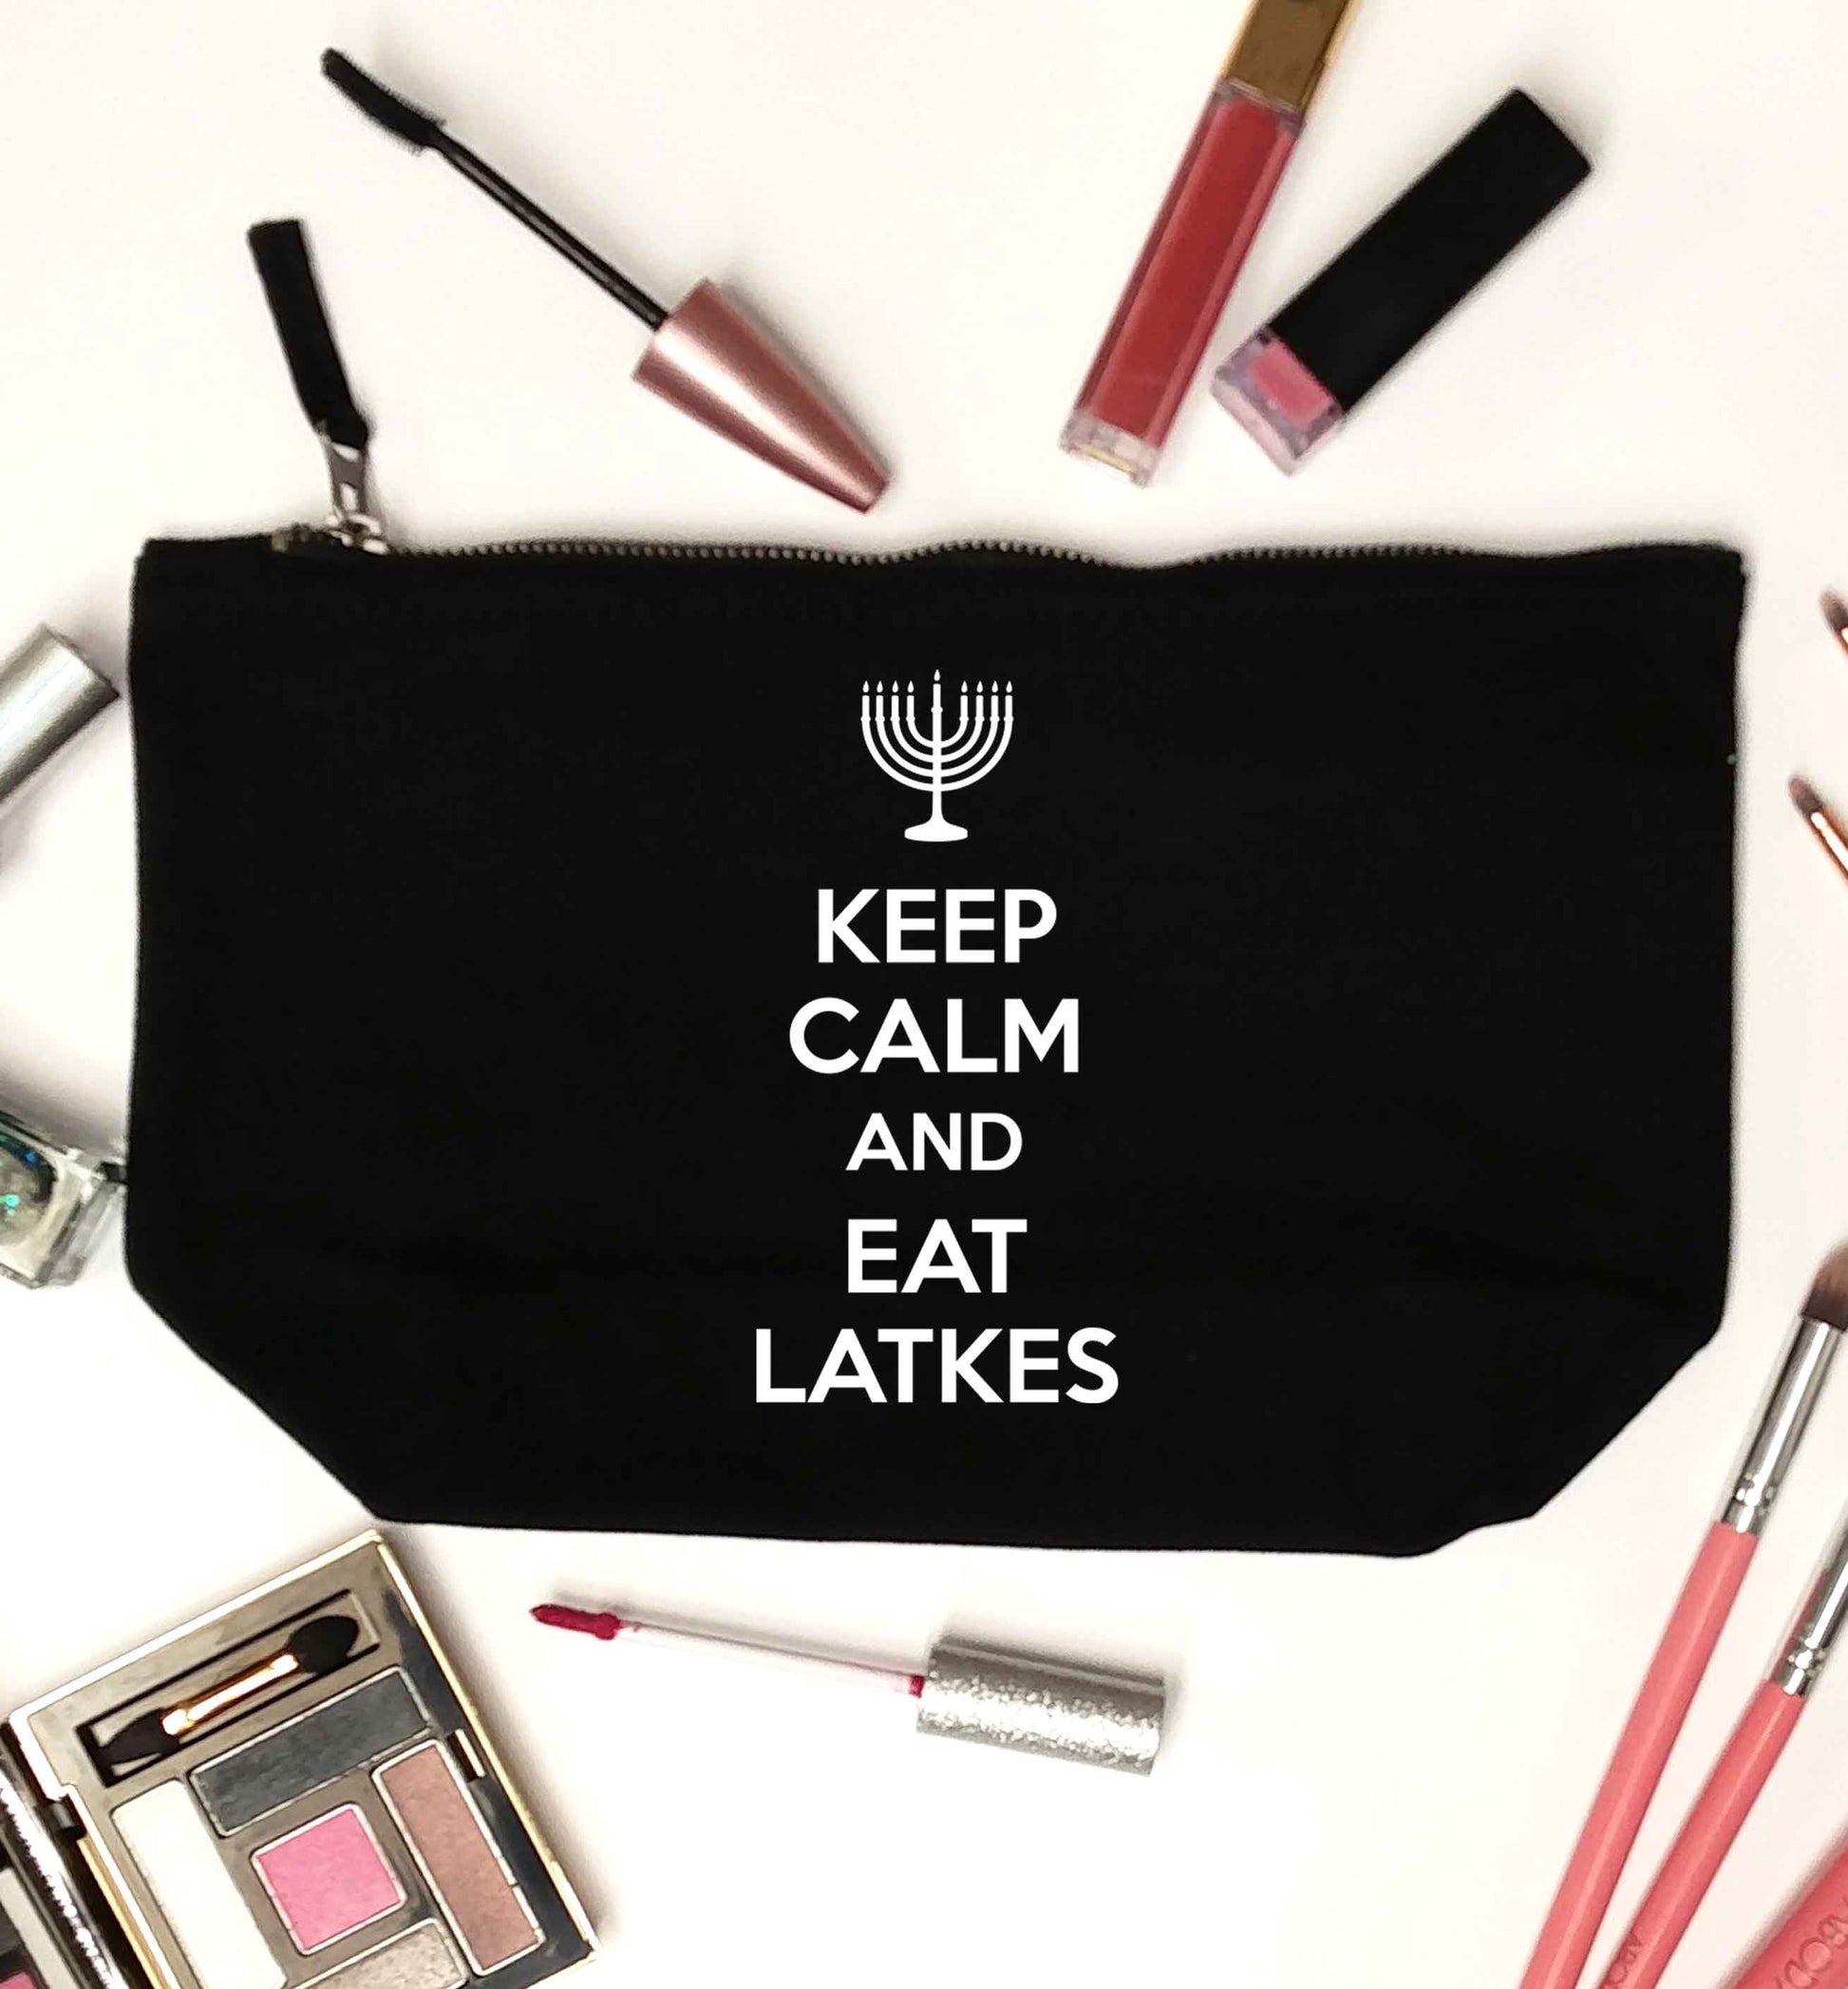 Keep calm and eat latkes black makeup bag